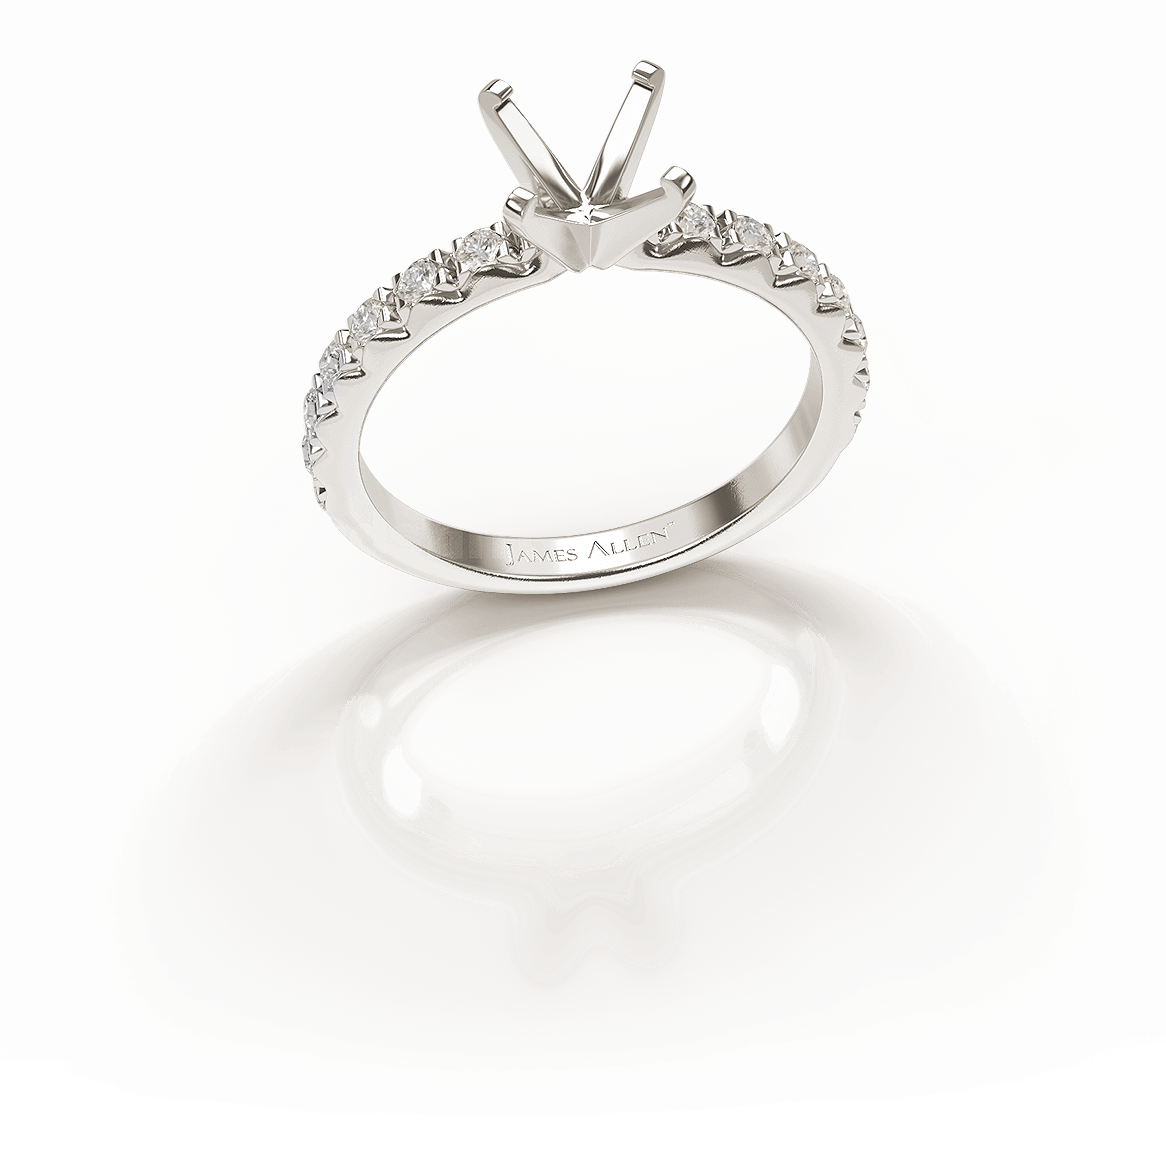 Black Diamonds Logo - Shop Engagement Rings and Loose Diamonds Online | JamesAllen.com